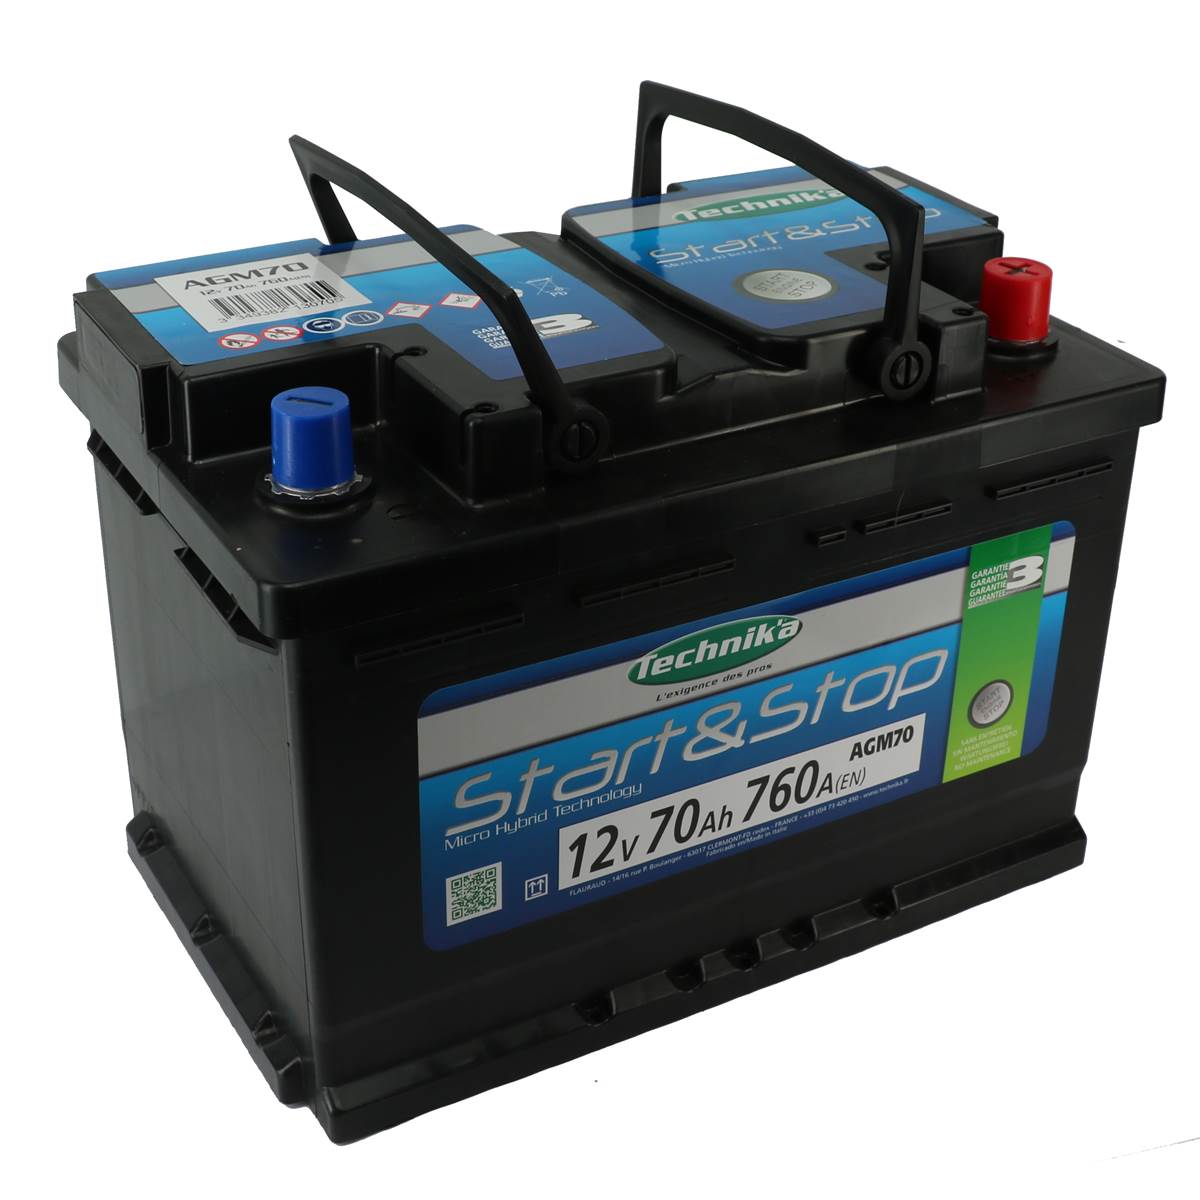 Batterie Voiture Technik'a Agm Start & Stop - 70ah / 760a - 12v